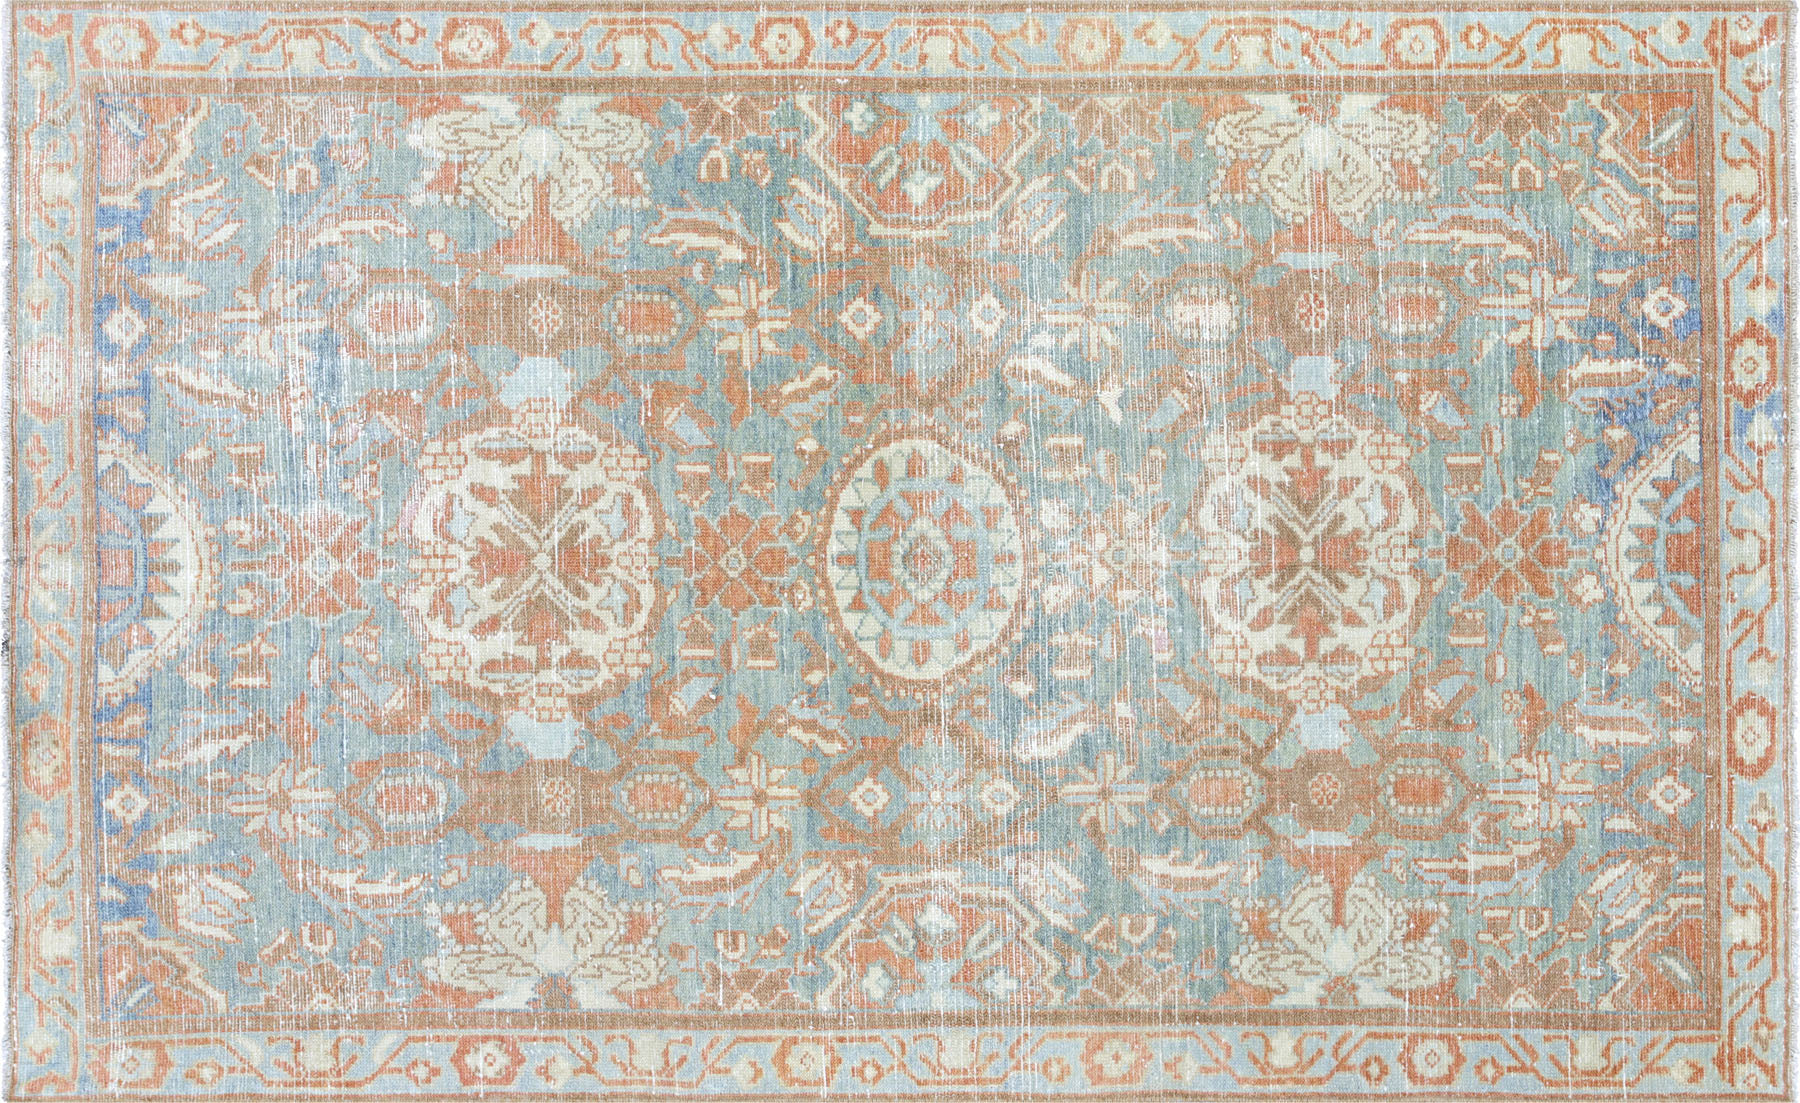 Antique Persian Melayer Carpet - 4'1" x 6'8"